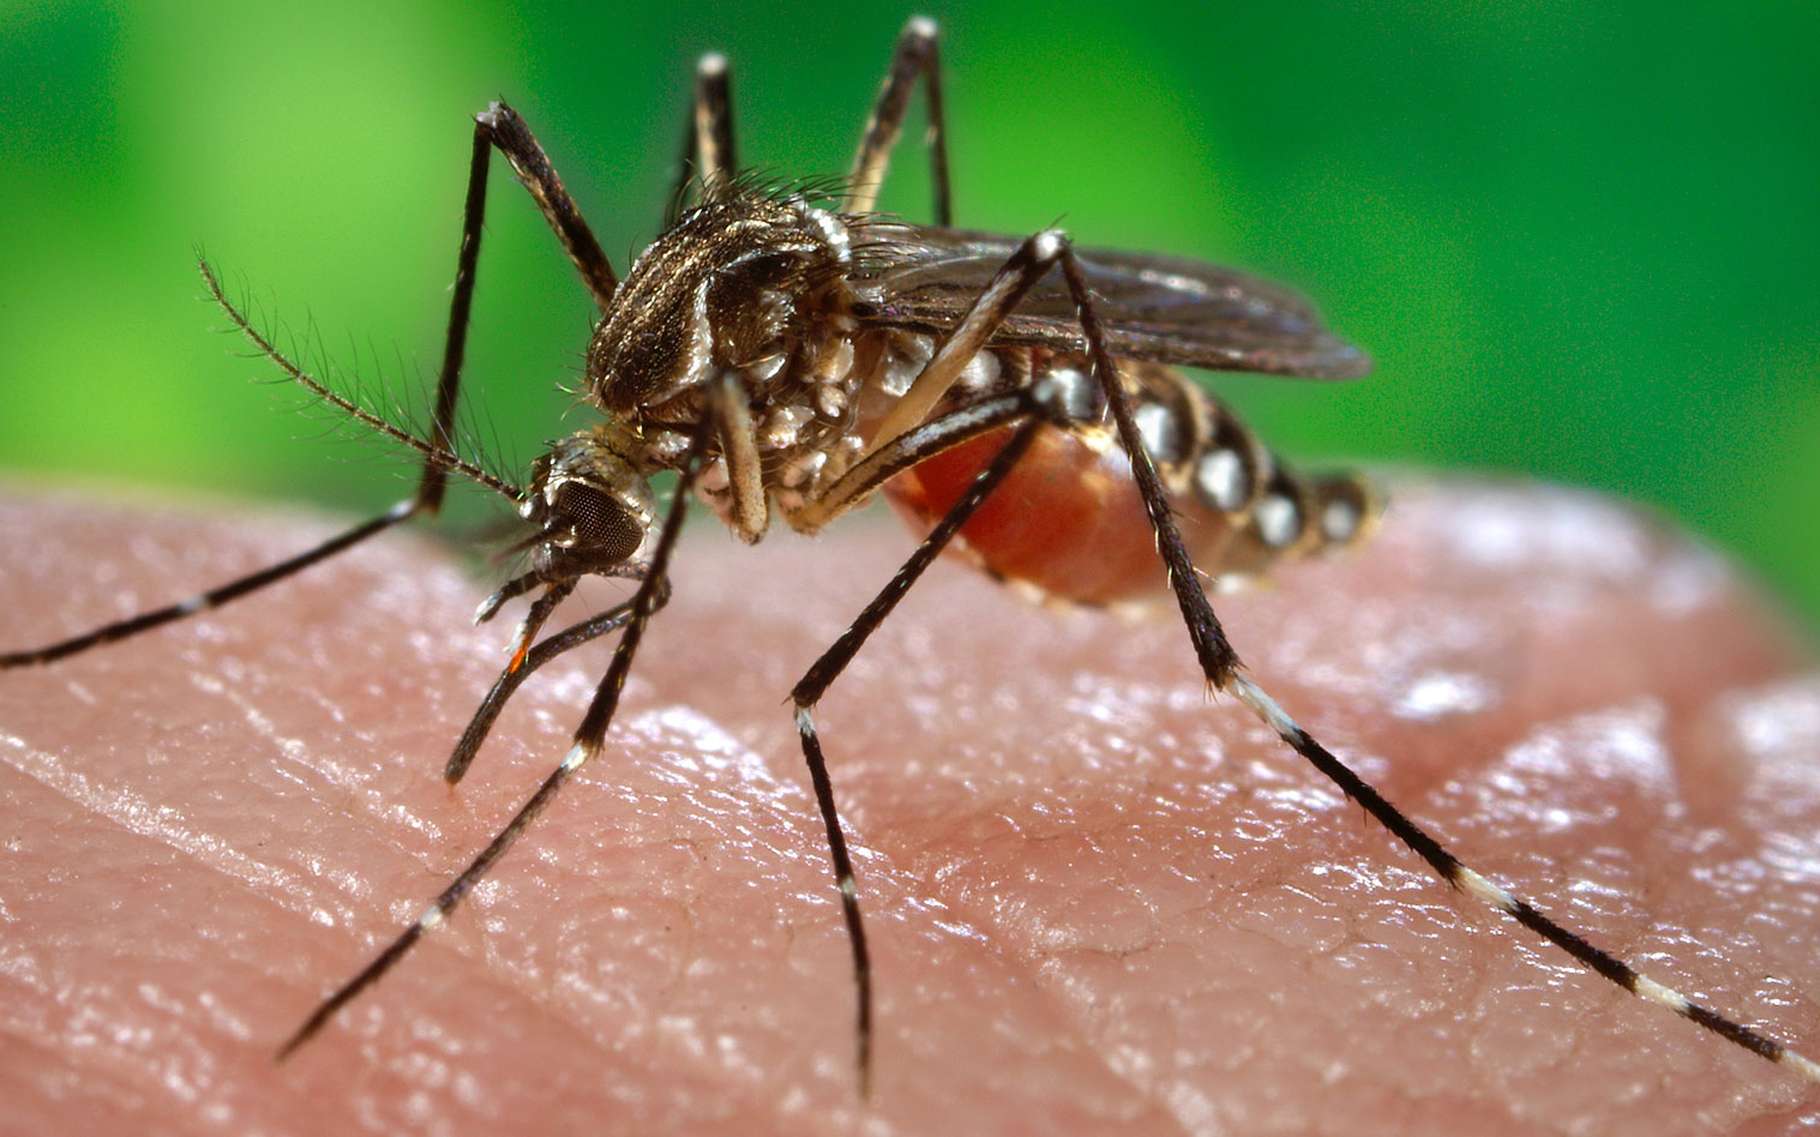 Le moustique peut transmettre une maladie. © James Gathany, Centers for Disease Control and Prevention, USA, domaine public